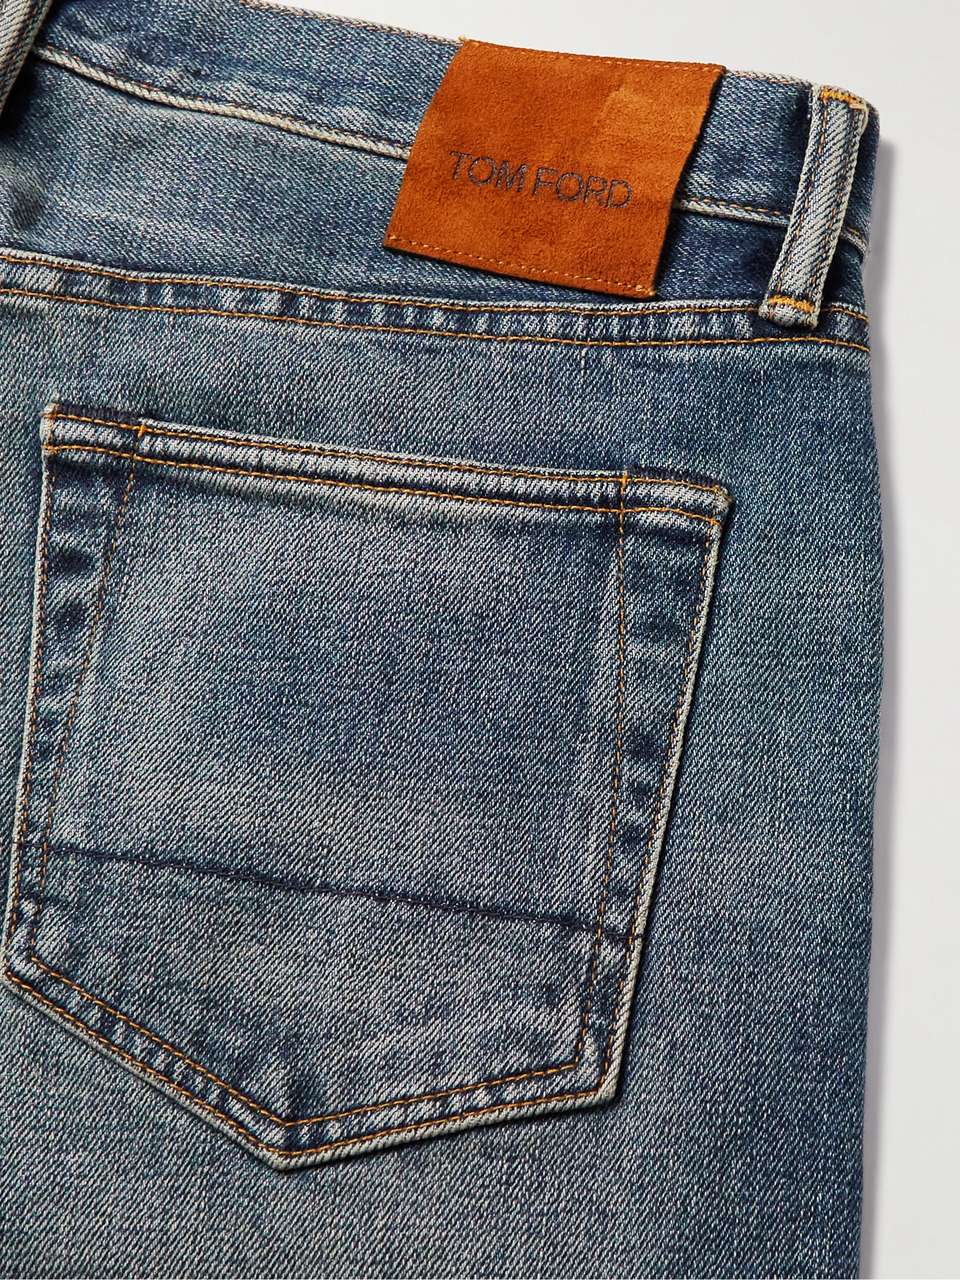 TOM FORD Slim-Fit Selvedge Jeans for Men | MR PORTER